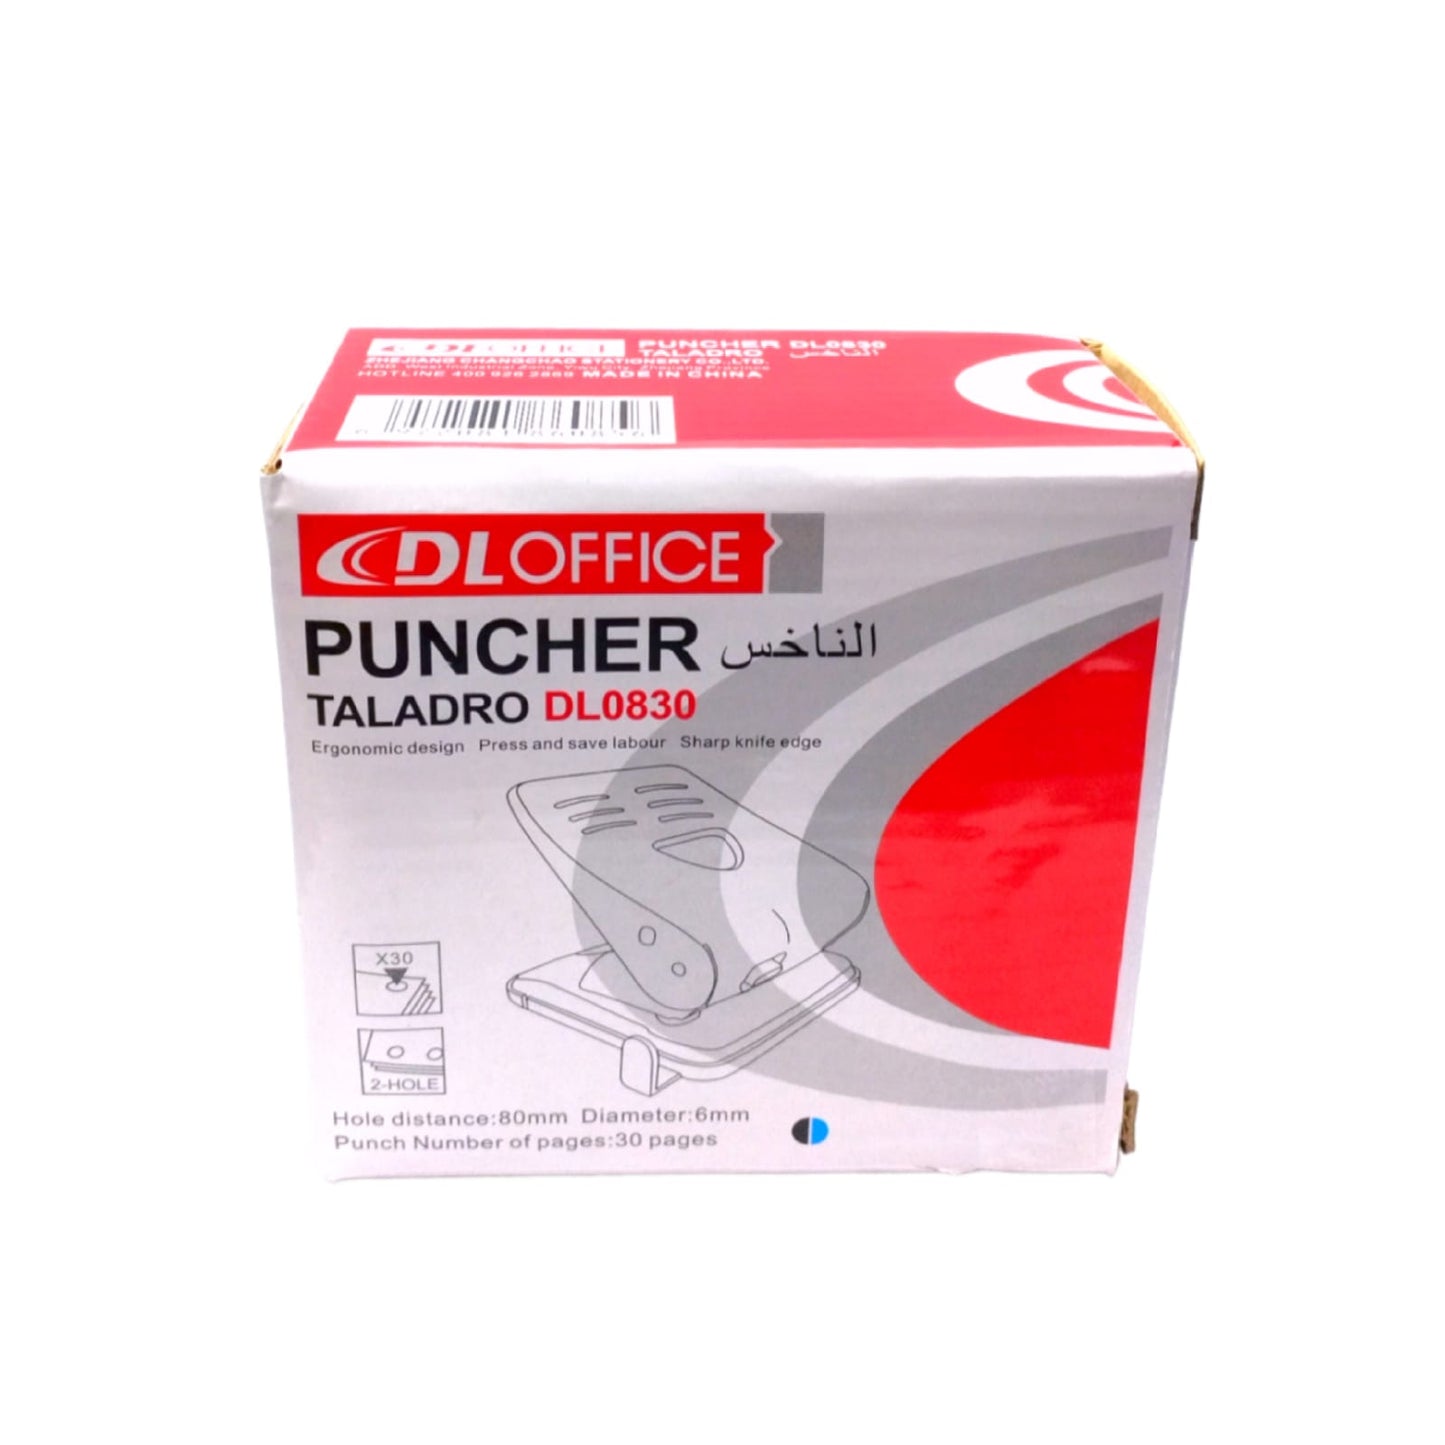 DL Office Puncher Taladro DL 0830 || خرامة دي ال فتحتين موديل رقم ٠٨٣٠